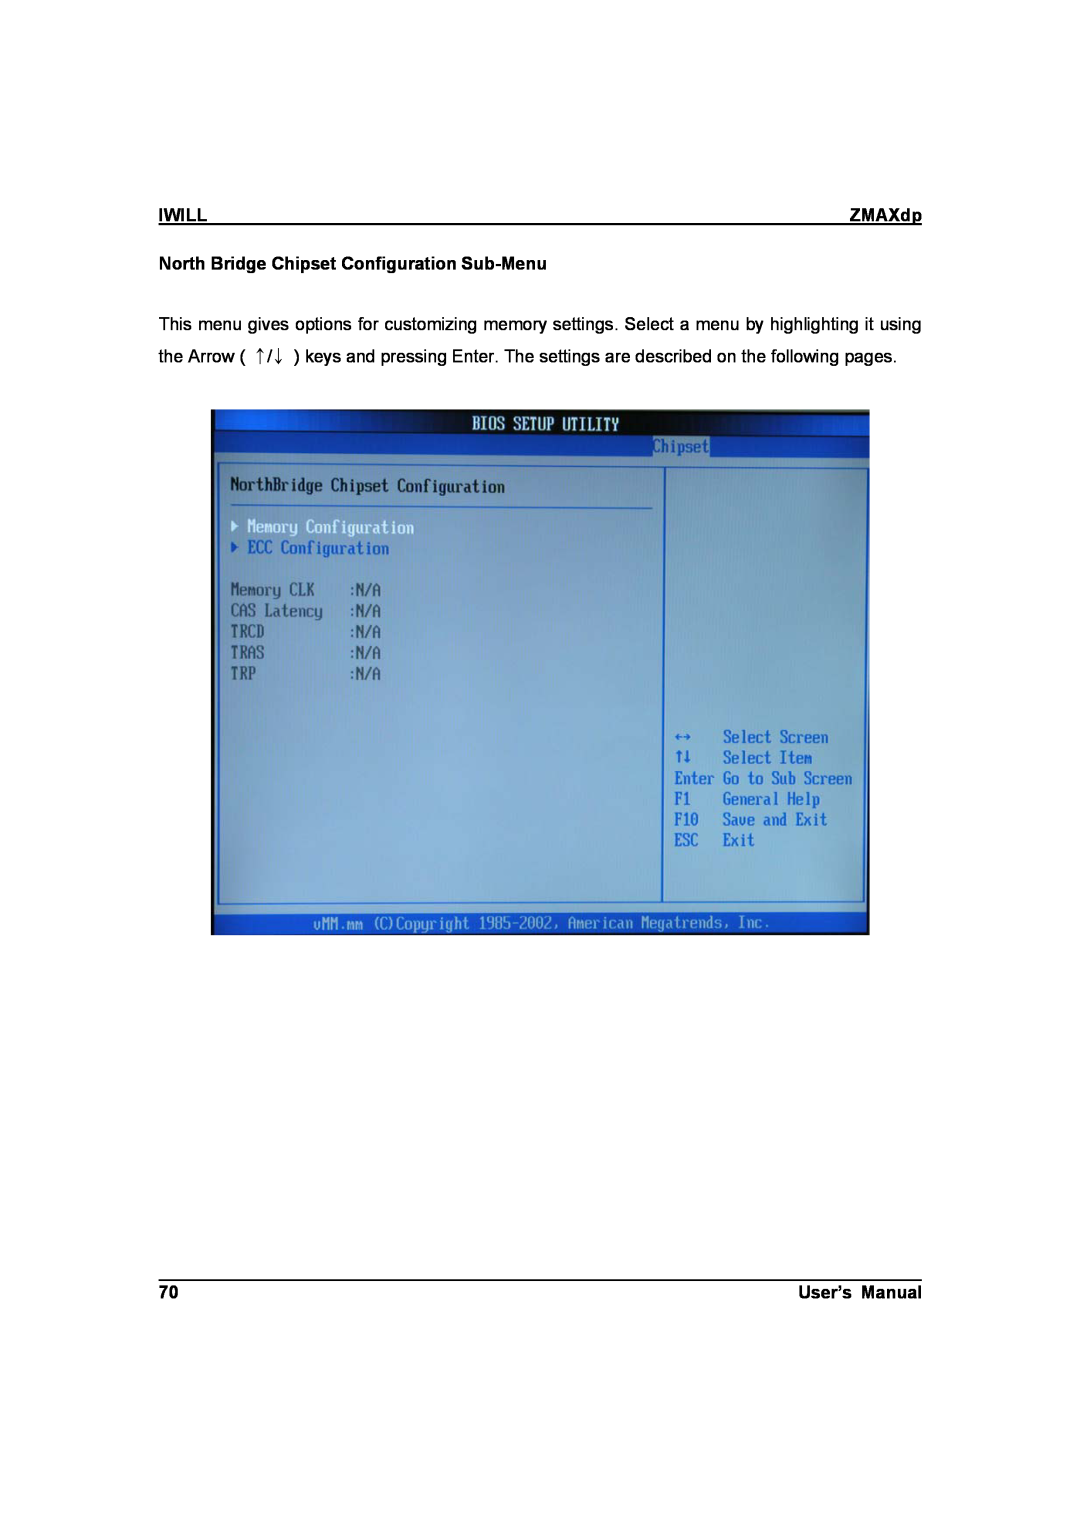 IBM ZMAXdp user manual Iwill, North Bridge Chipset Configuration Sub-Menu, User’s Manual 